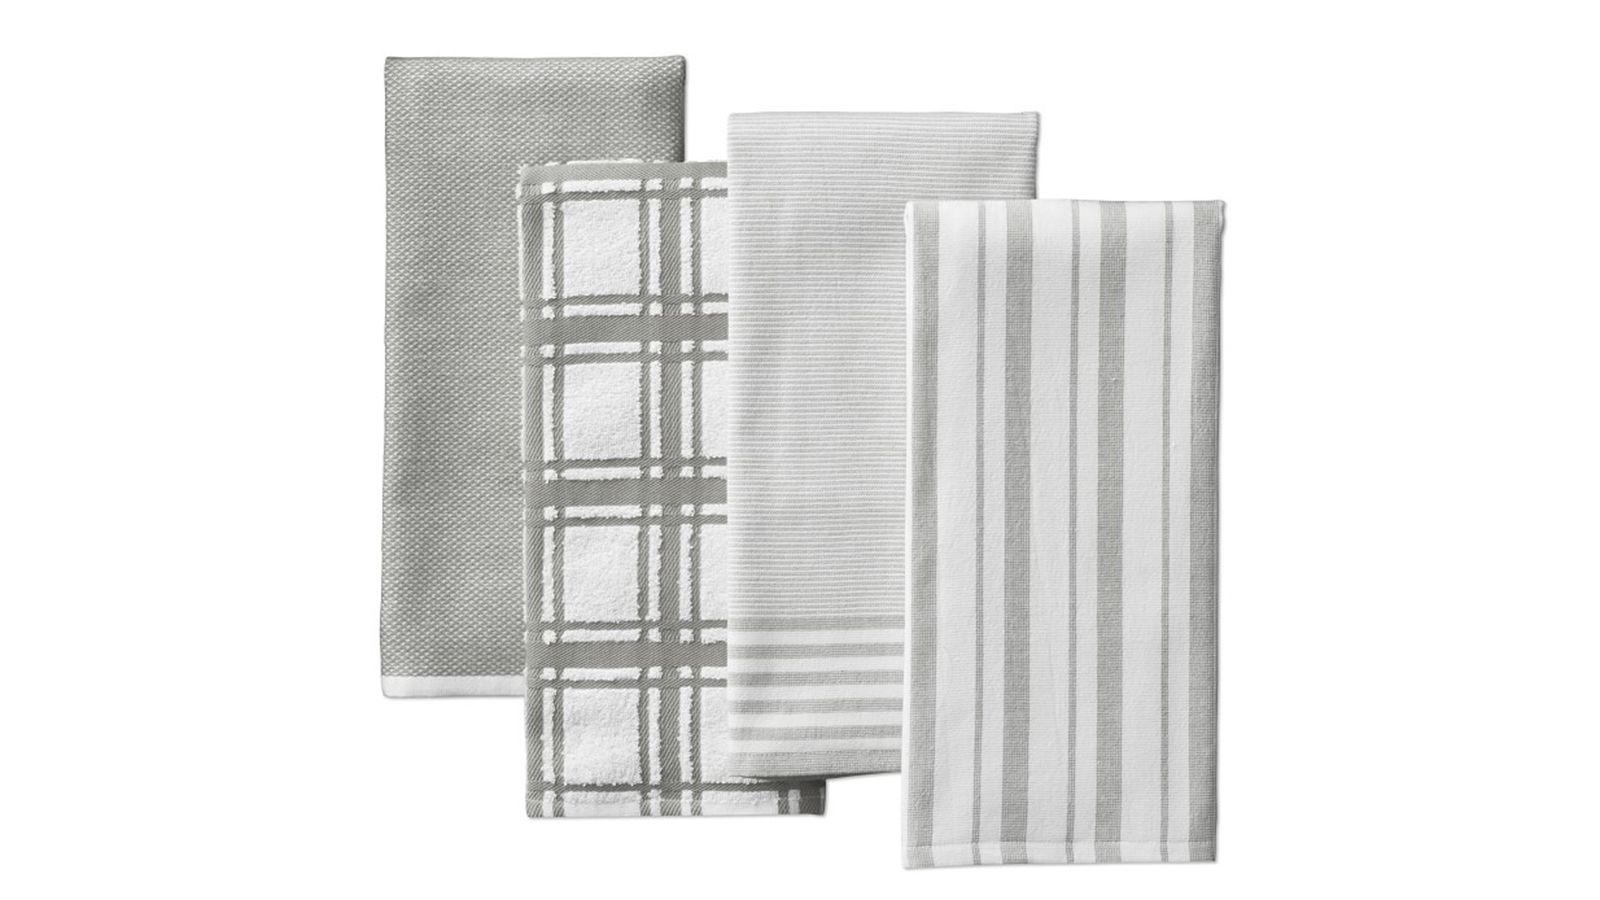 https://media.cnn.com/api/v1/images/stellar/prod/kardashian-kitchen-williams-sonoma-multi-pack-absorbent-towels-dishcloths-bundle-set-of-4.jpg?q=h_900,w_1600,x_0,y_0